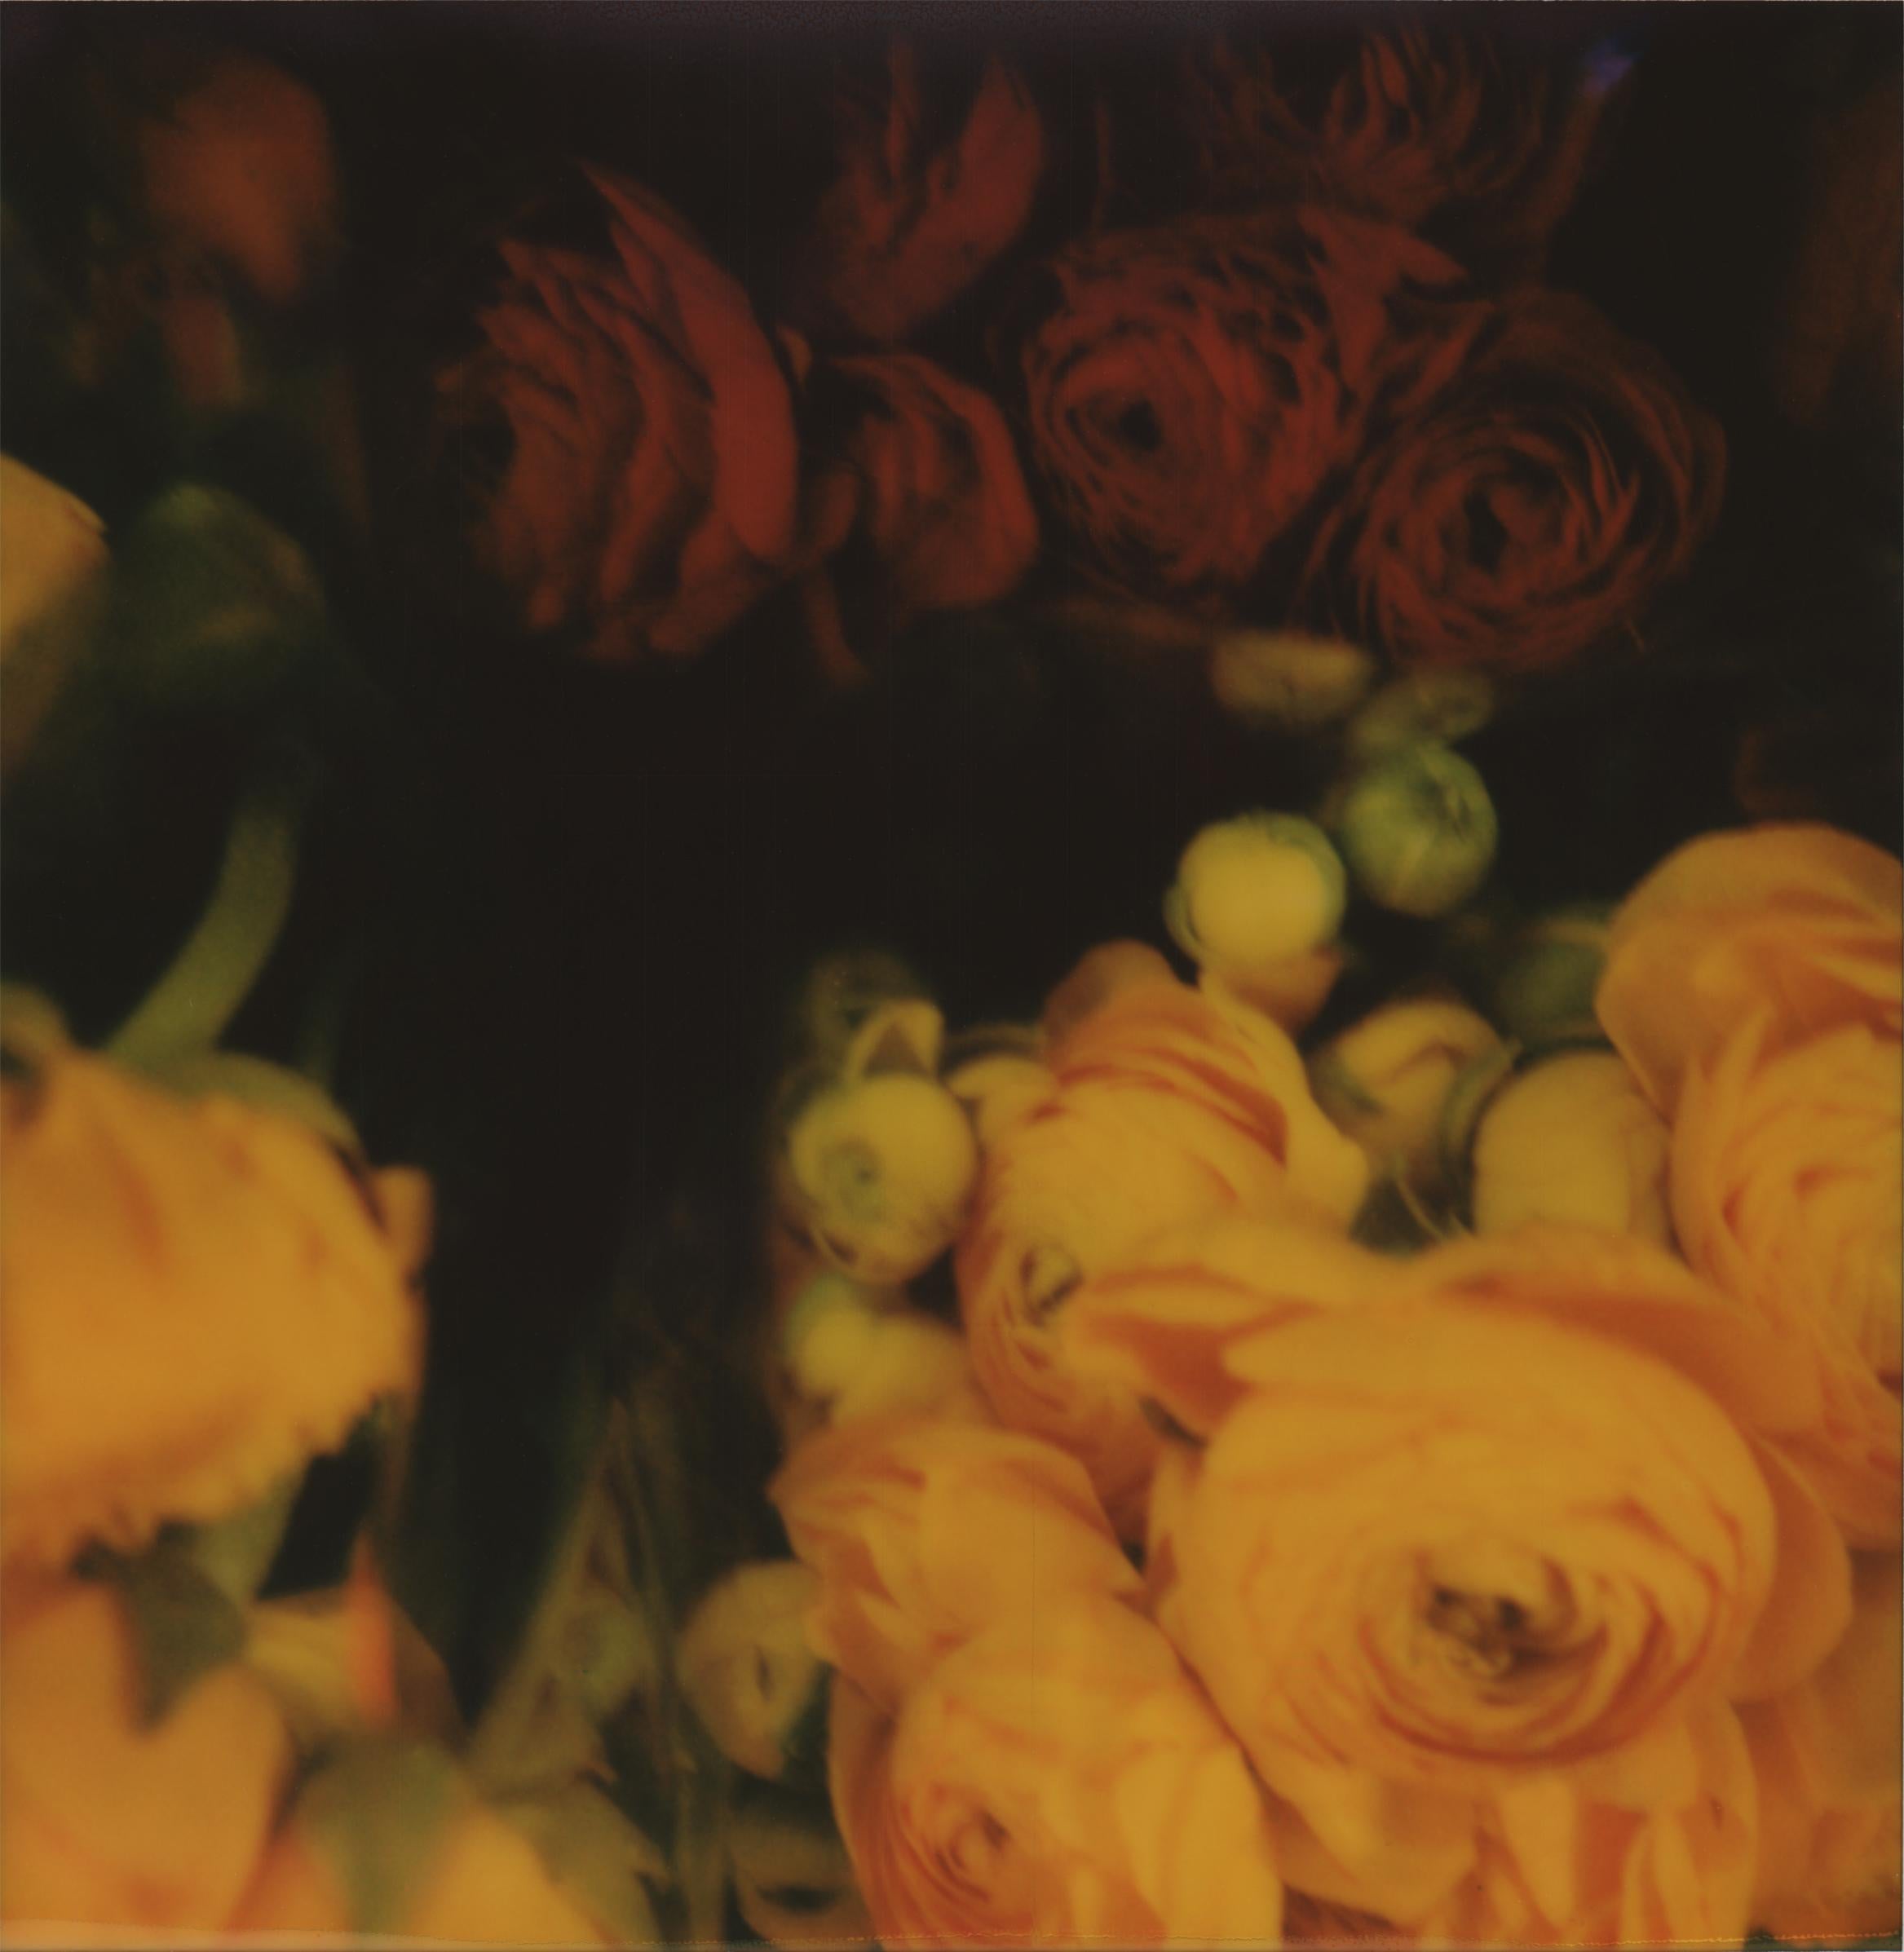 Lori Van Houten Color Photograph - Ranunculus: Romantic Still-Life Photograph of Soft Red & Pink Flowers, Framed